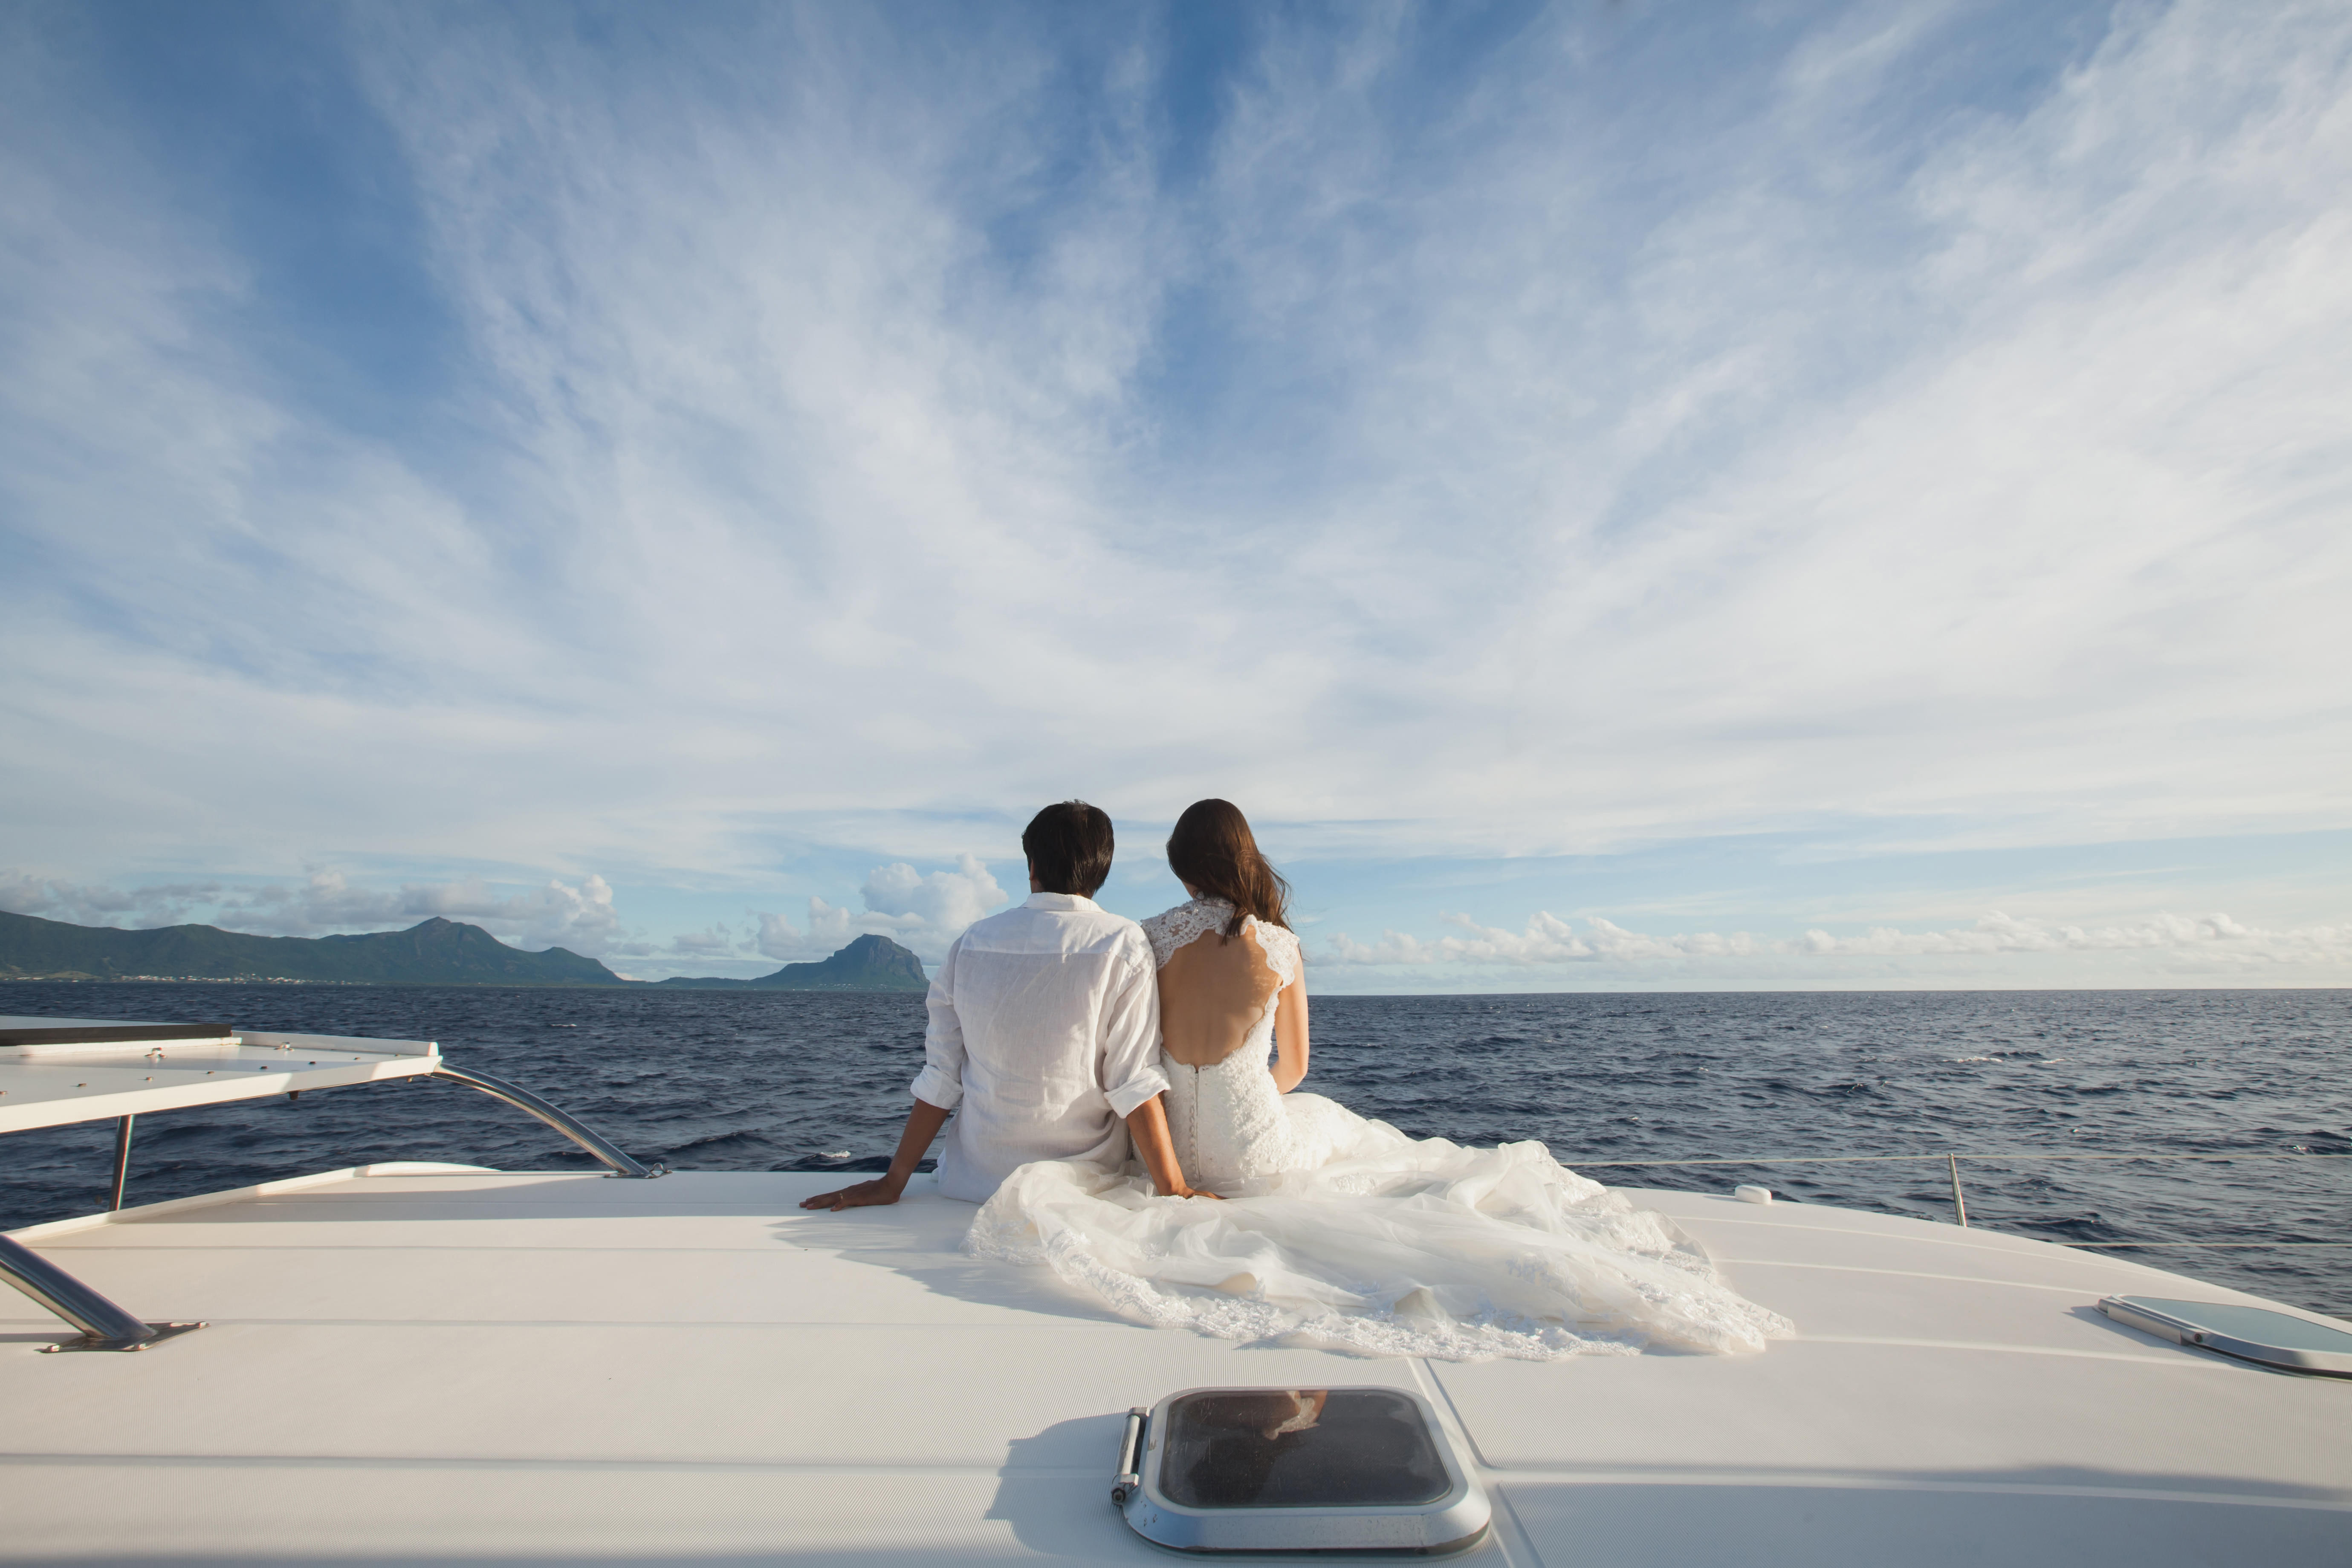 Couple enjoying the catamaran boat ride